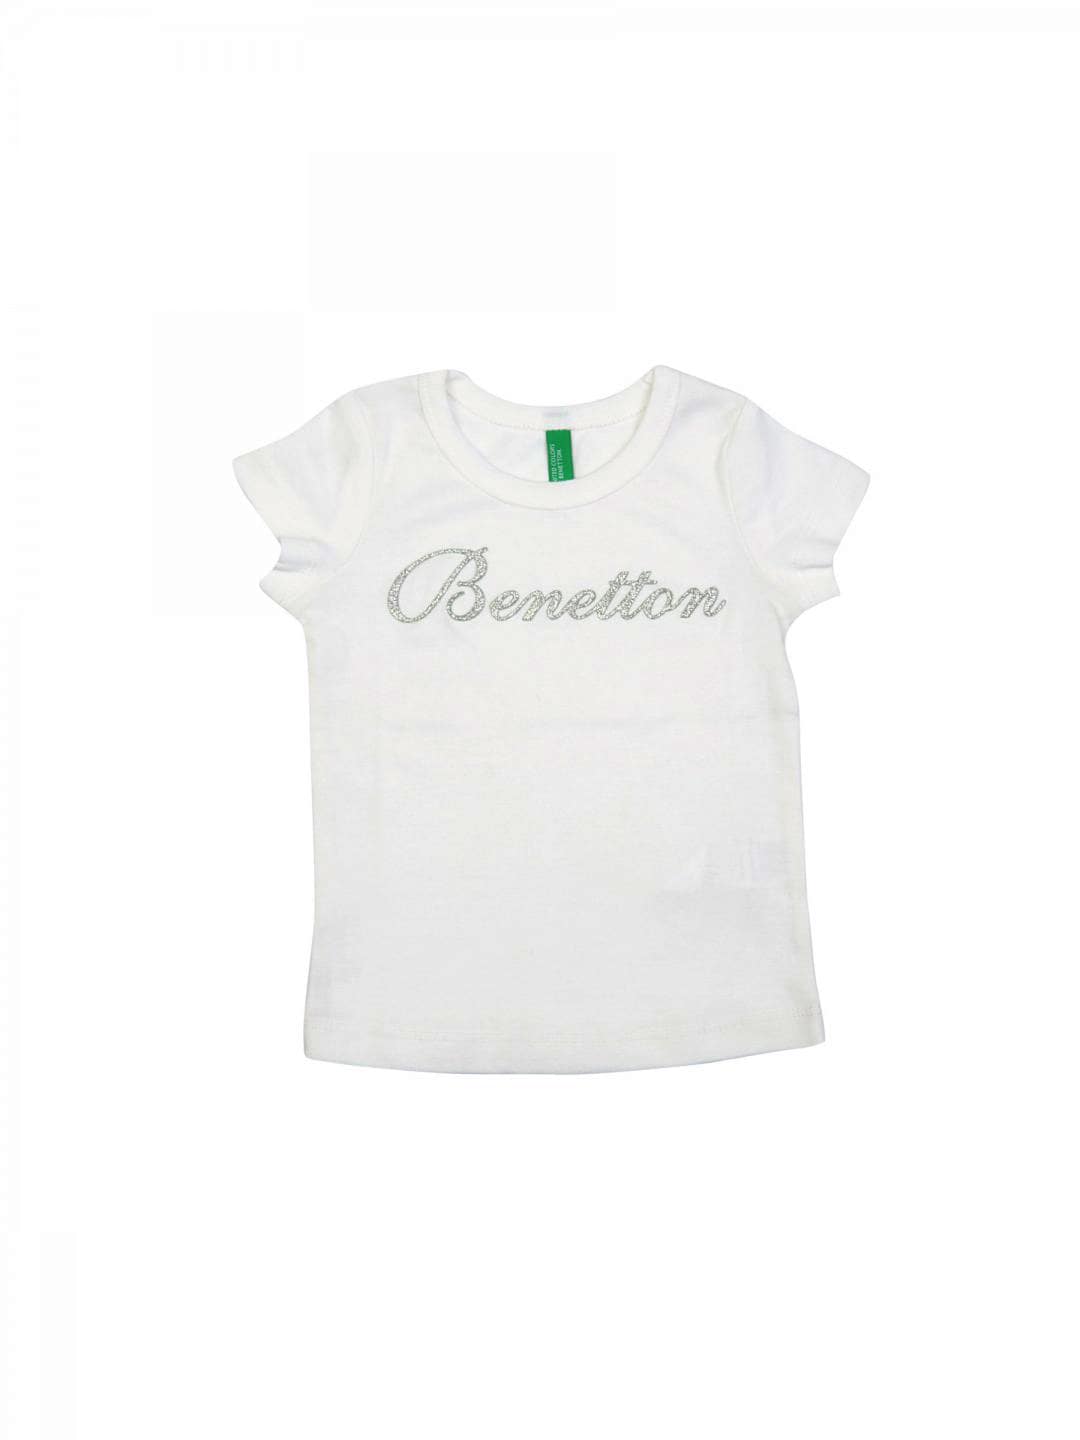 United Colors of Benetton Kids Girls White T-shirt